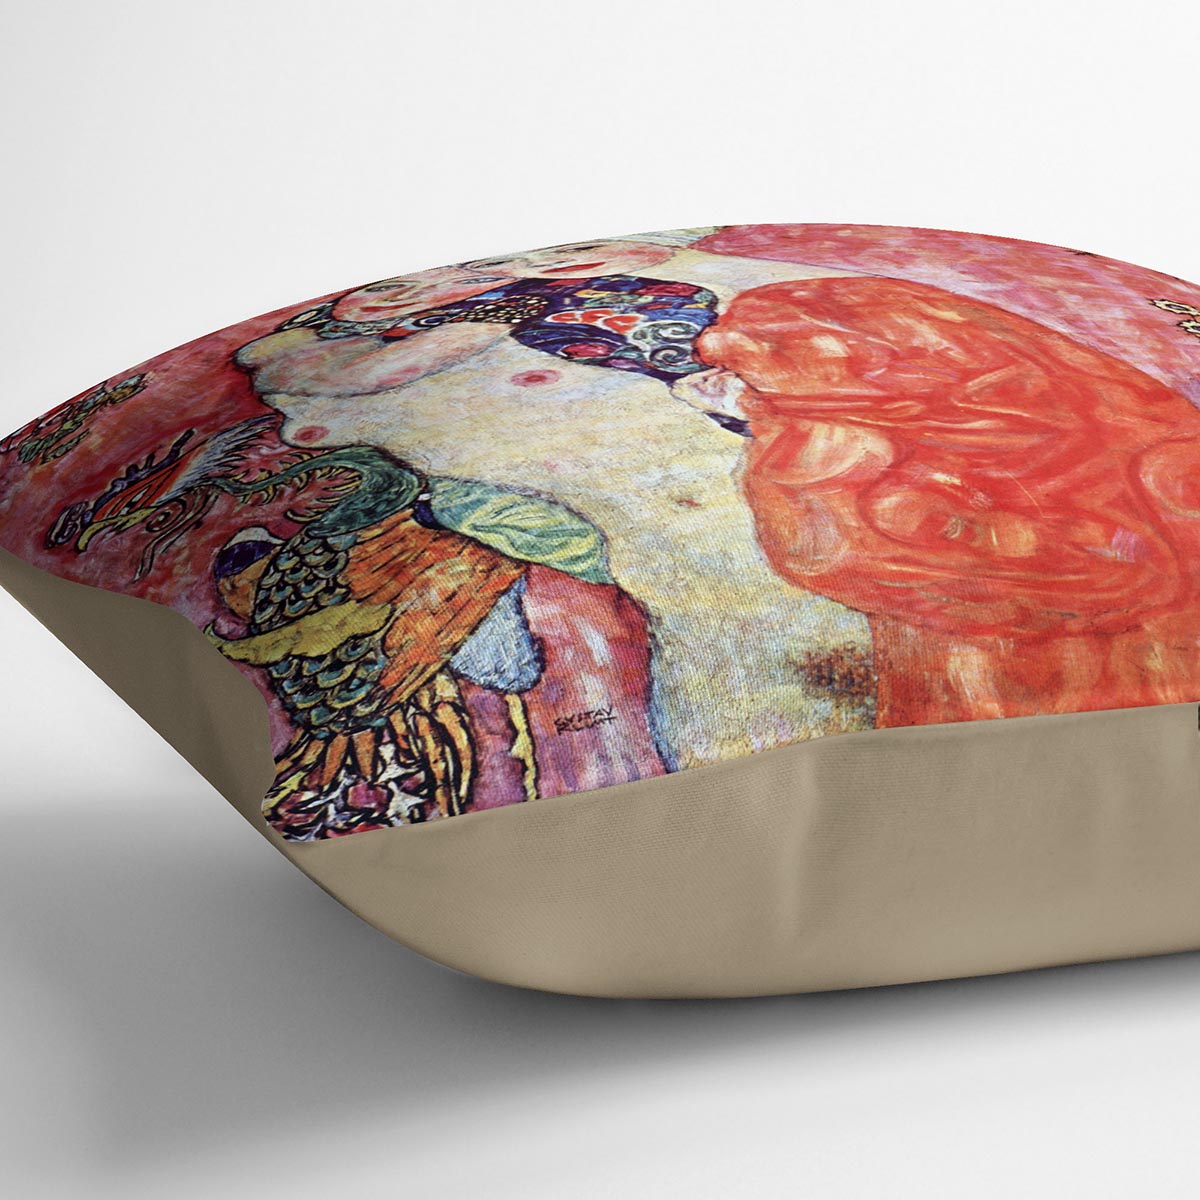 The girlfriends by Klimt Cushion